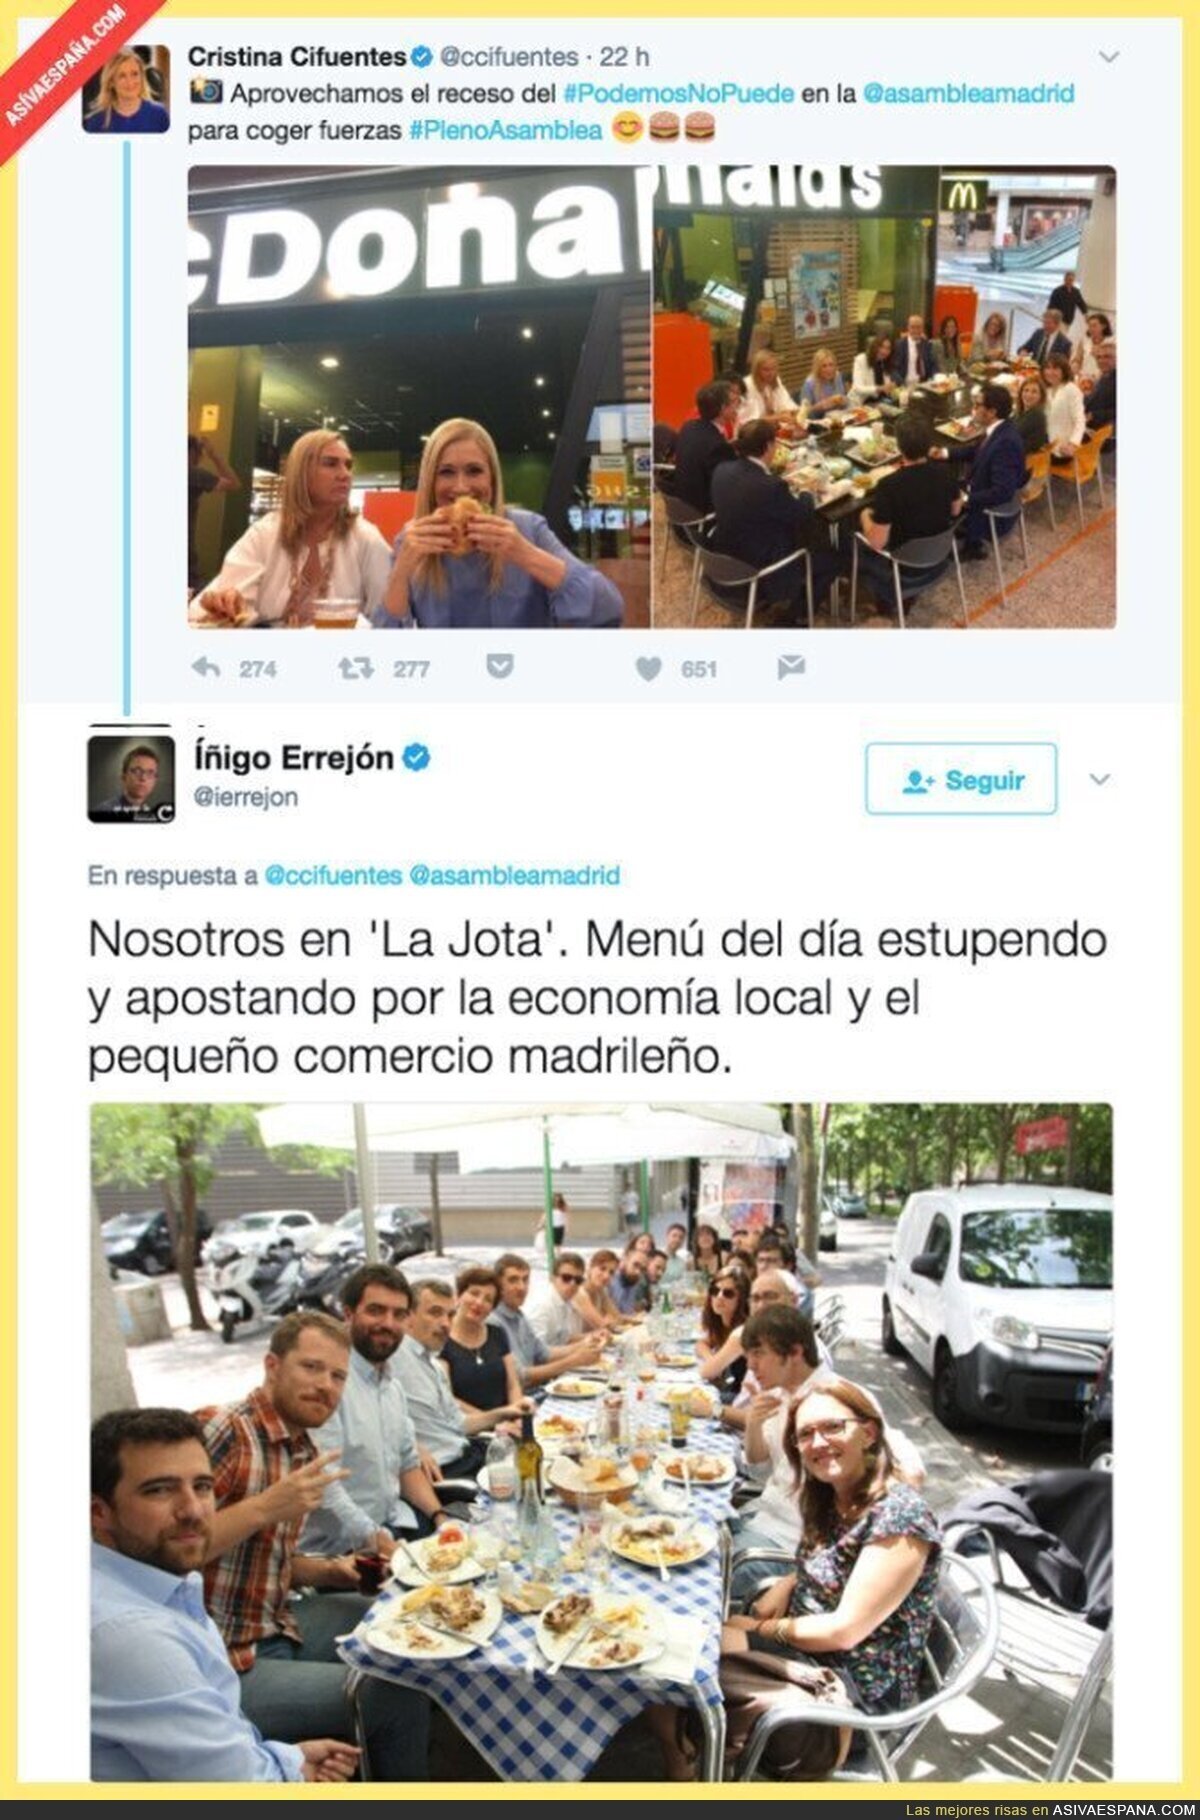 Cristina Cifuentes acude al McDonald's y se come un Big Mac + un zasca de Íñigo Errejón